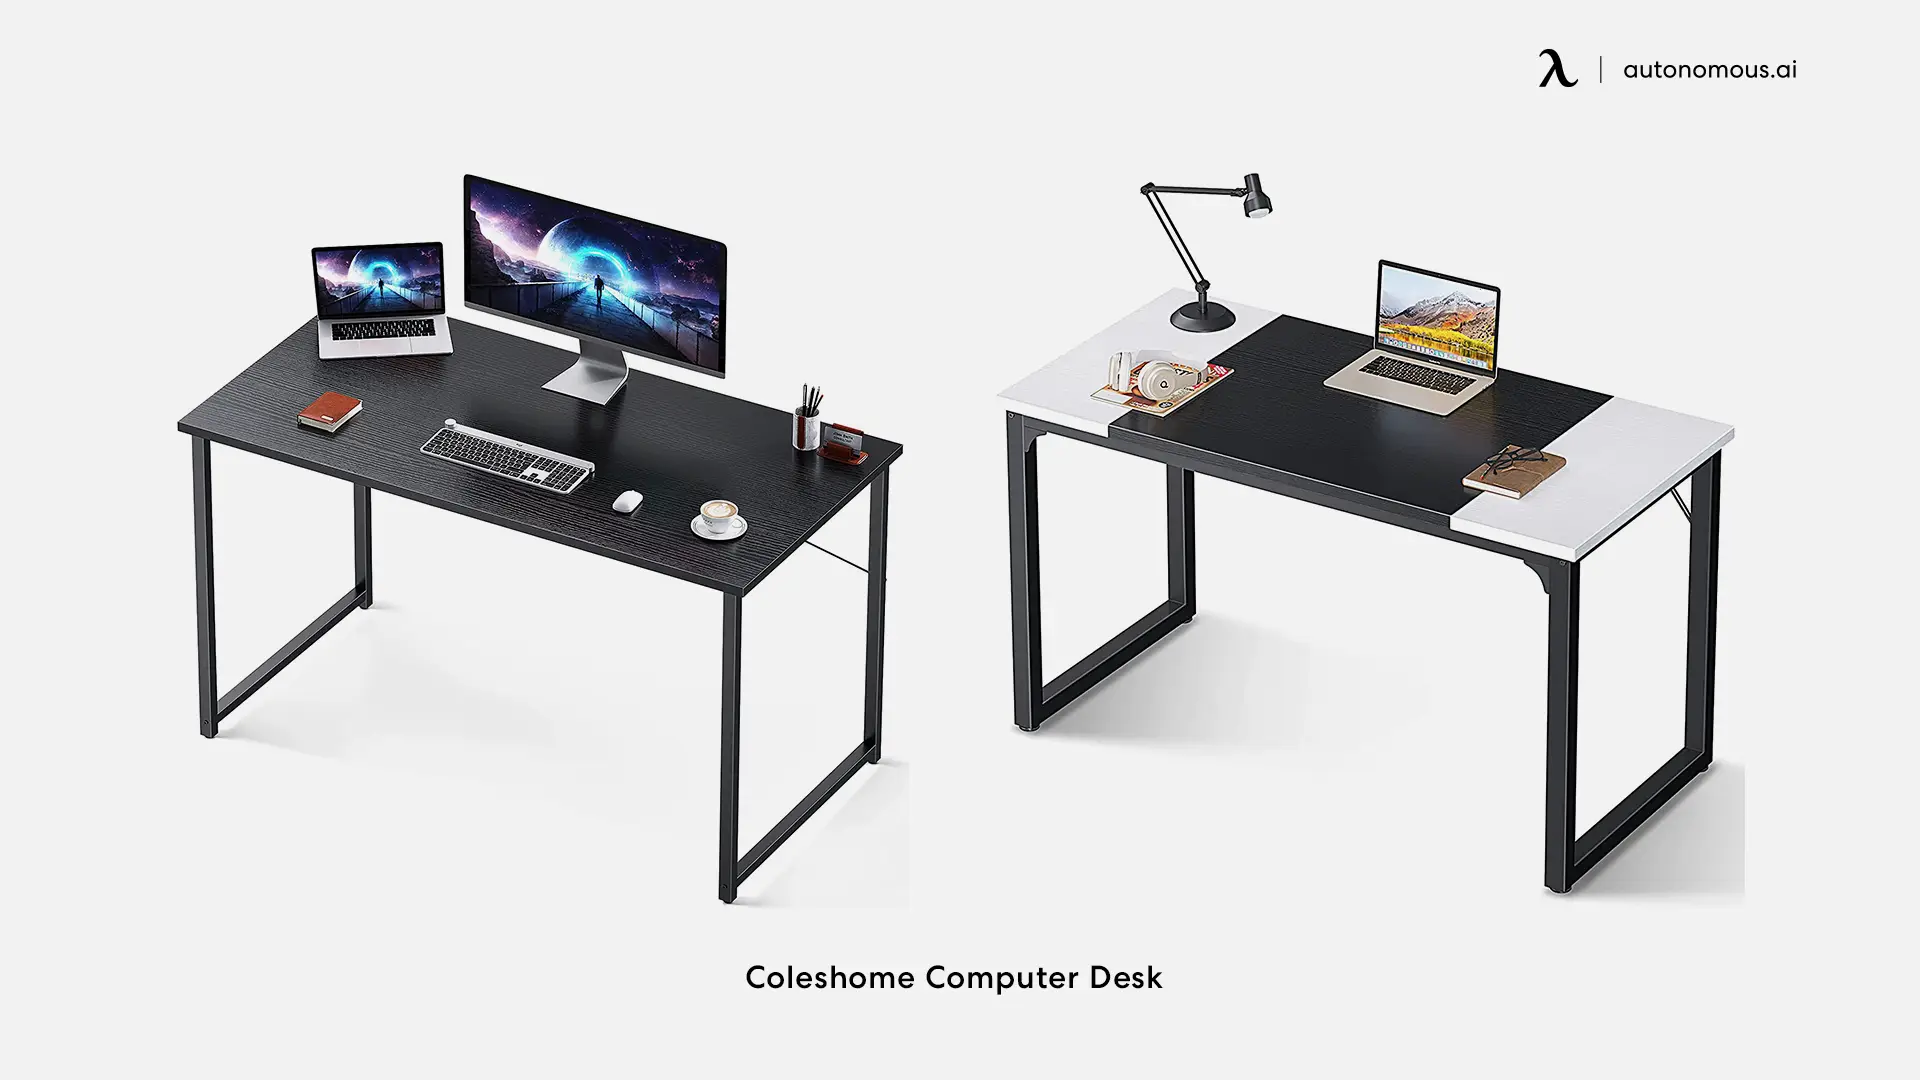 Coleshome Computer Desk